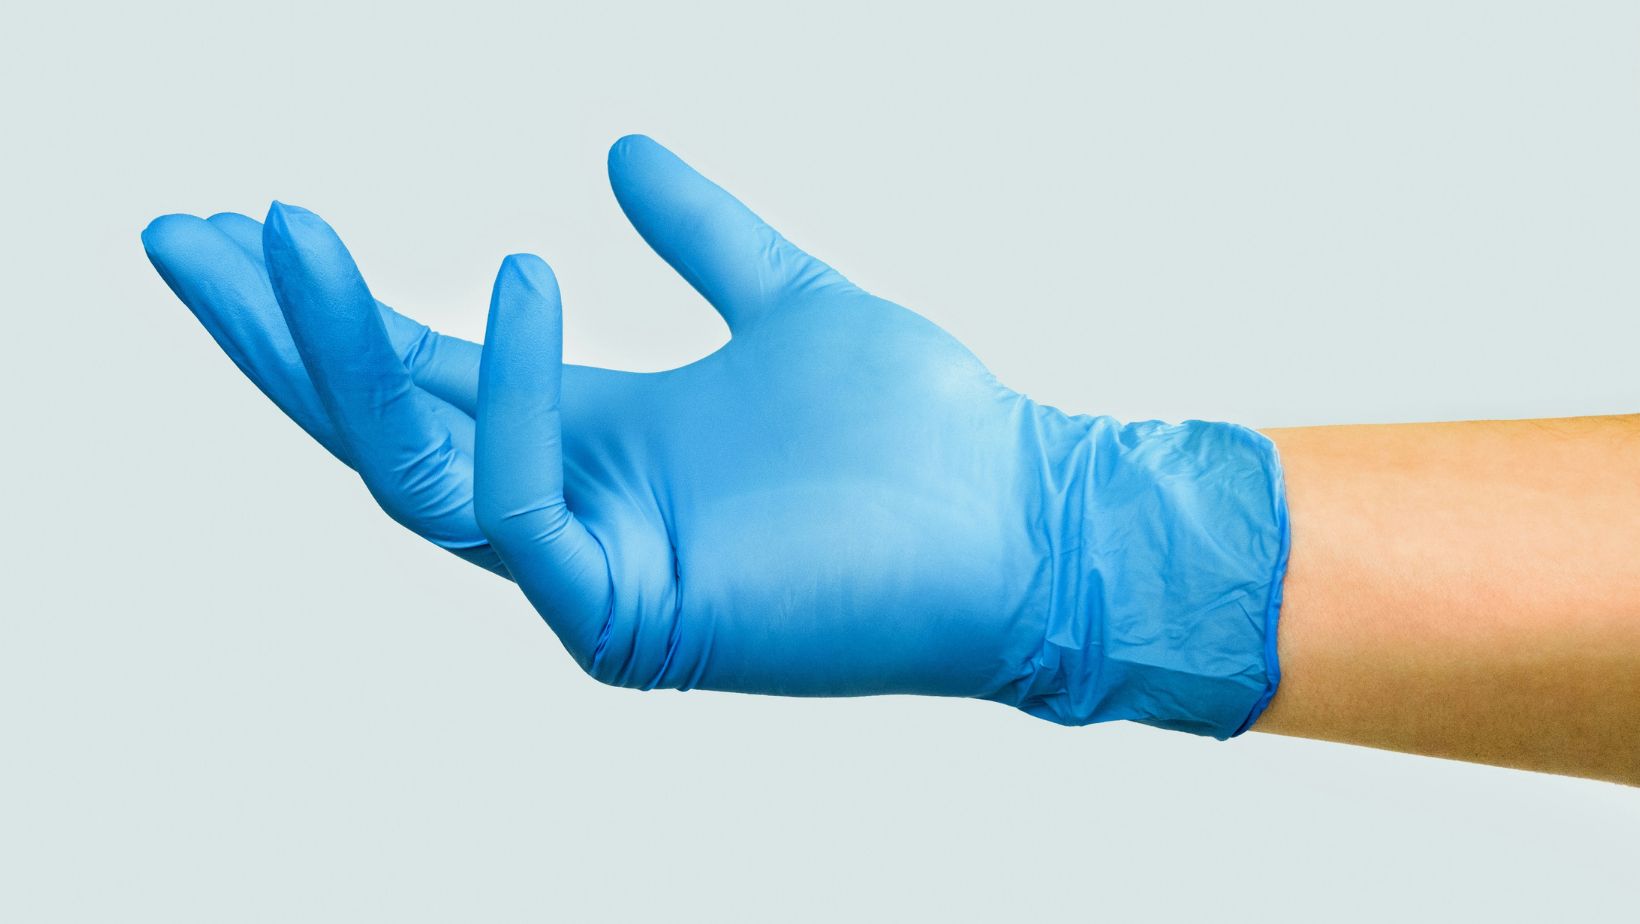 Hand in a blue rubber glove